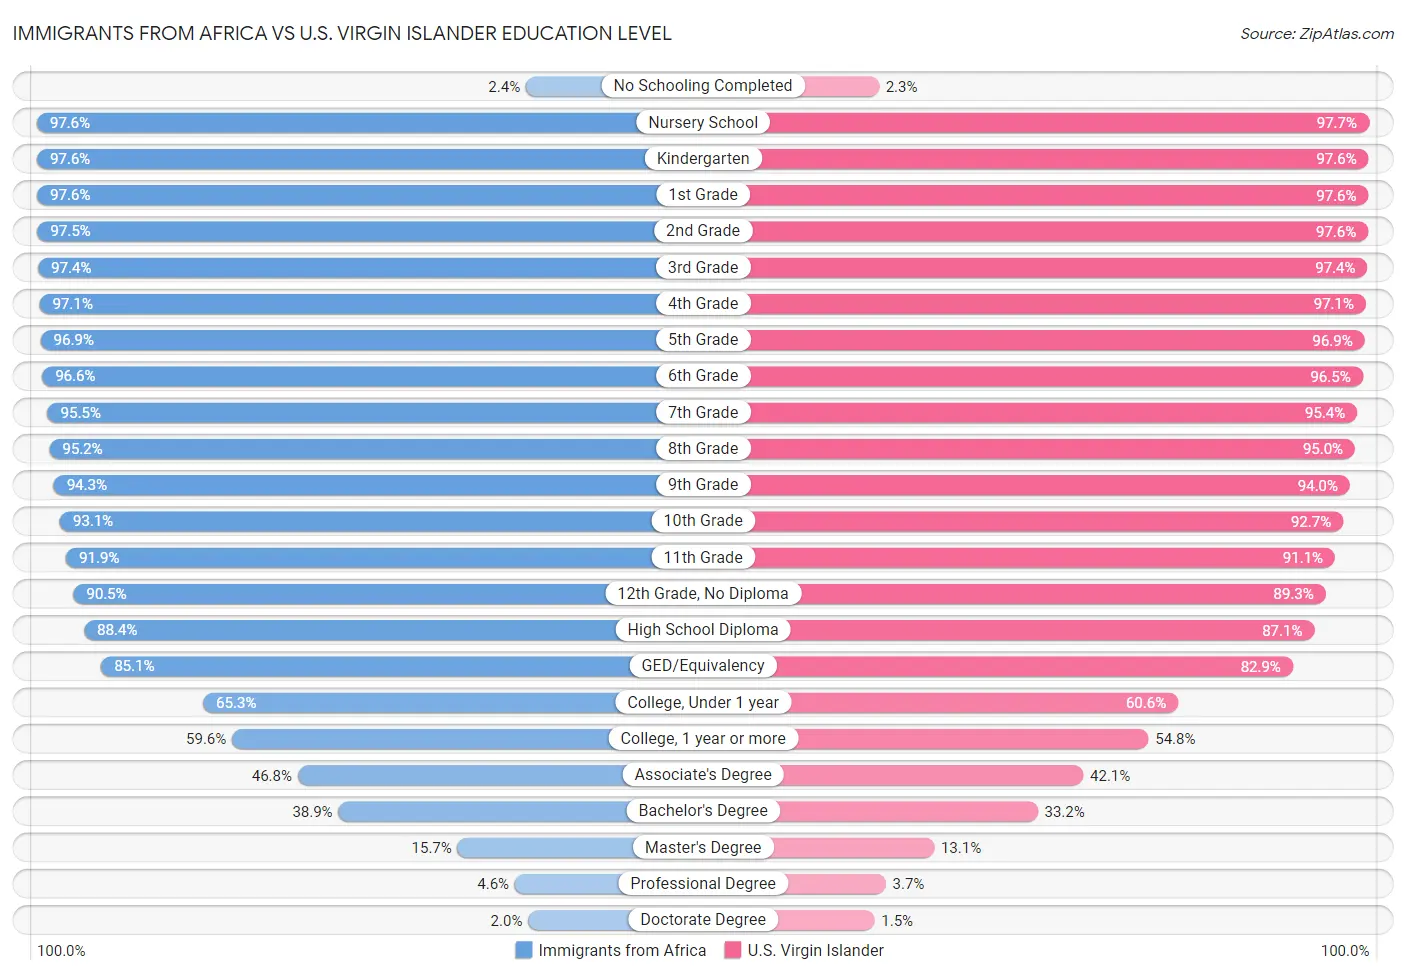 Immigrants from Africa vs U.S. Virgin Islander Education Level